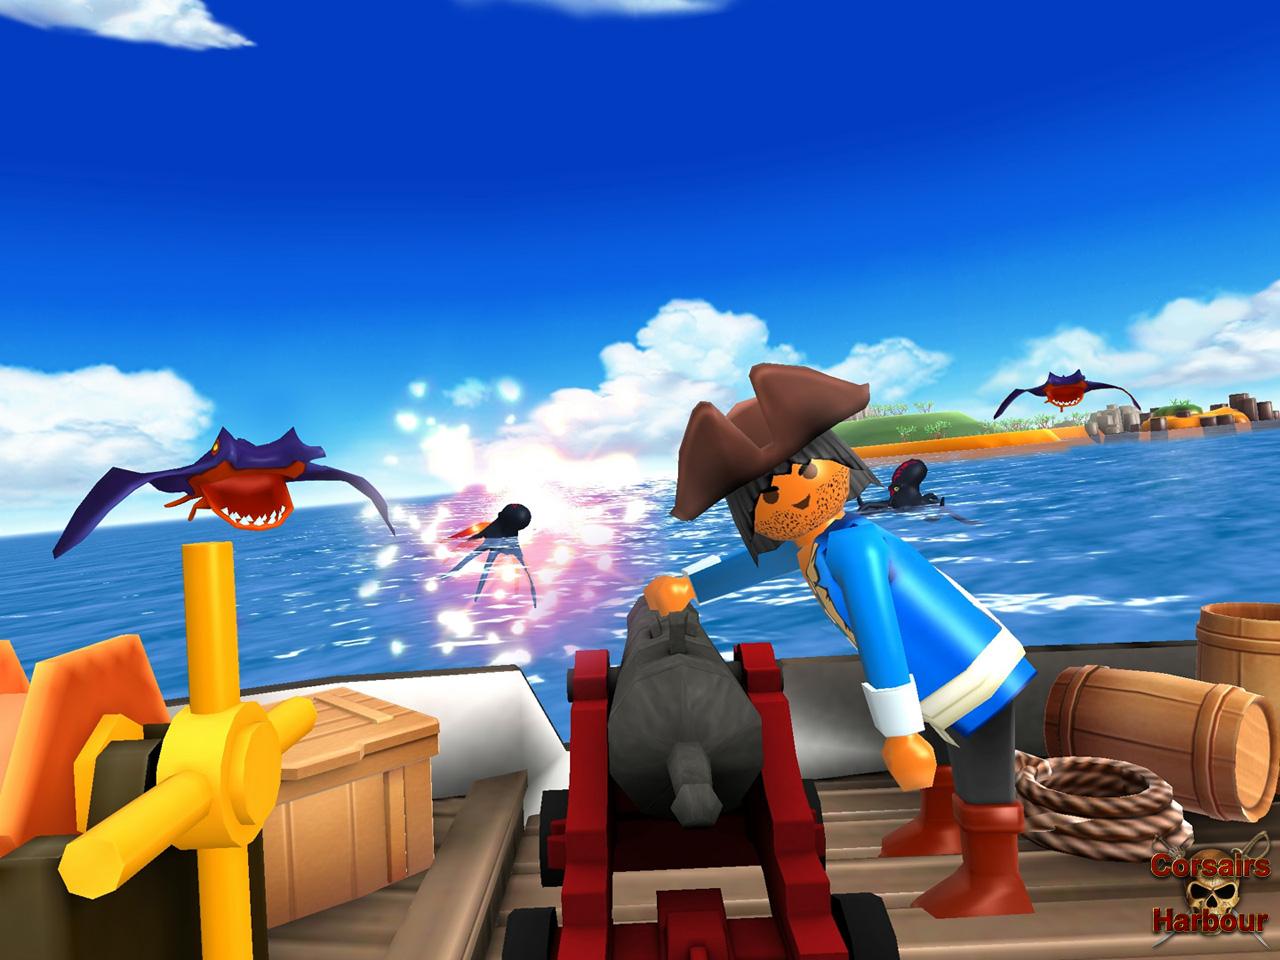 Игра пираты. Playmobil Pirates игра. Андроид пират. Прикольные мини игры. Playmobil Pirates игра на PSP.